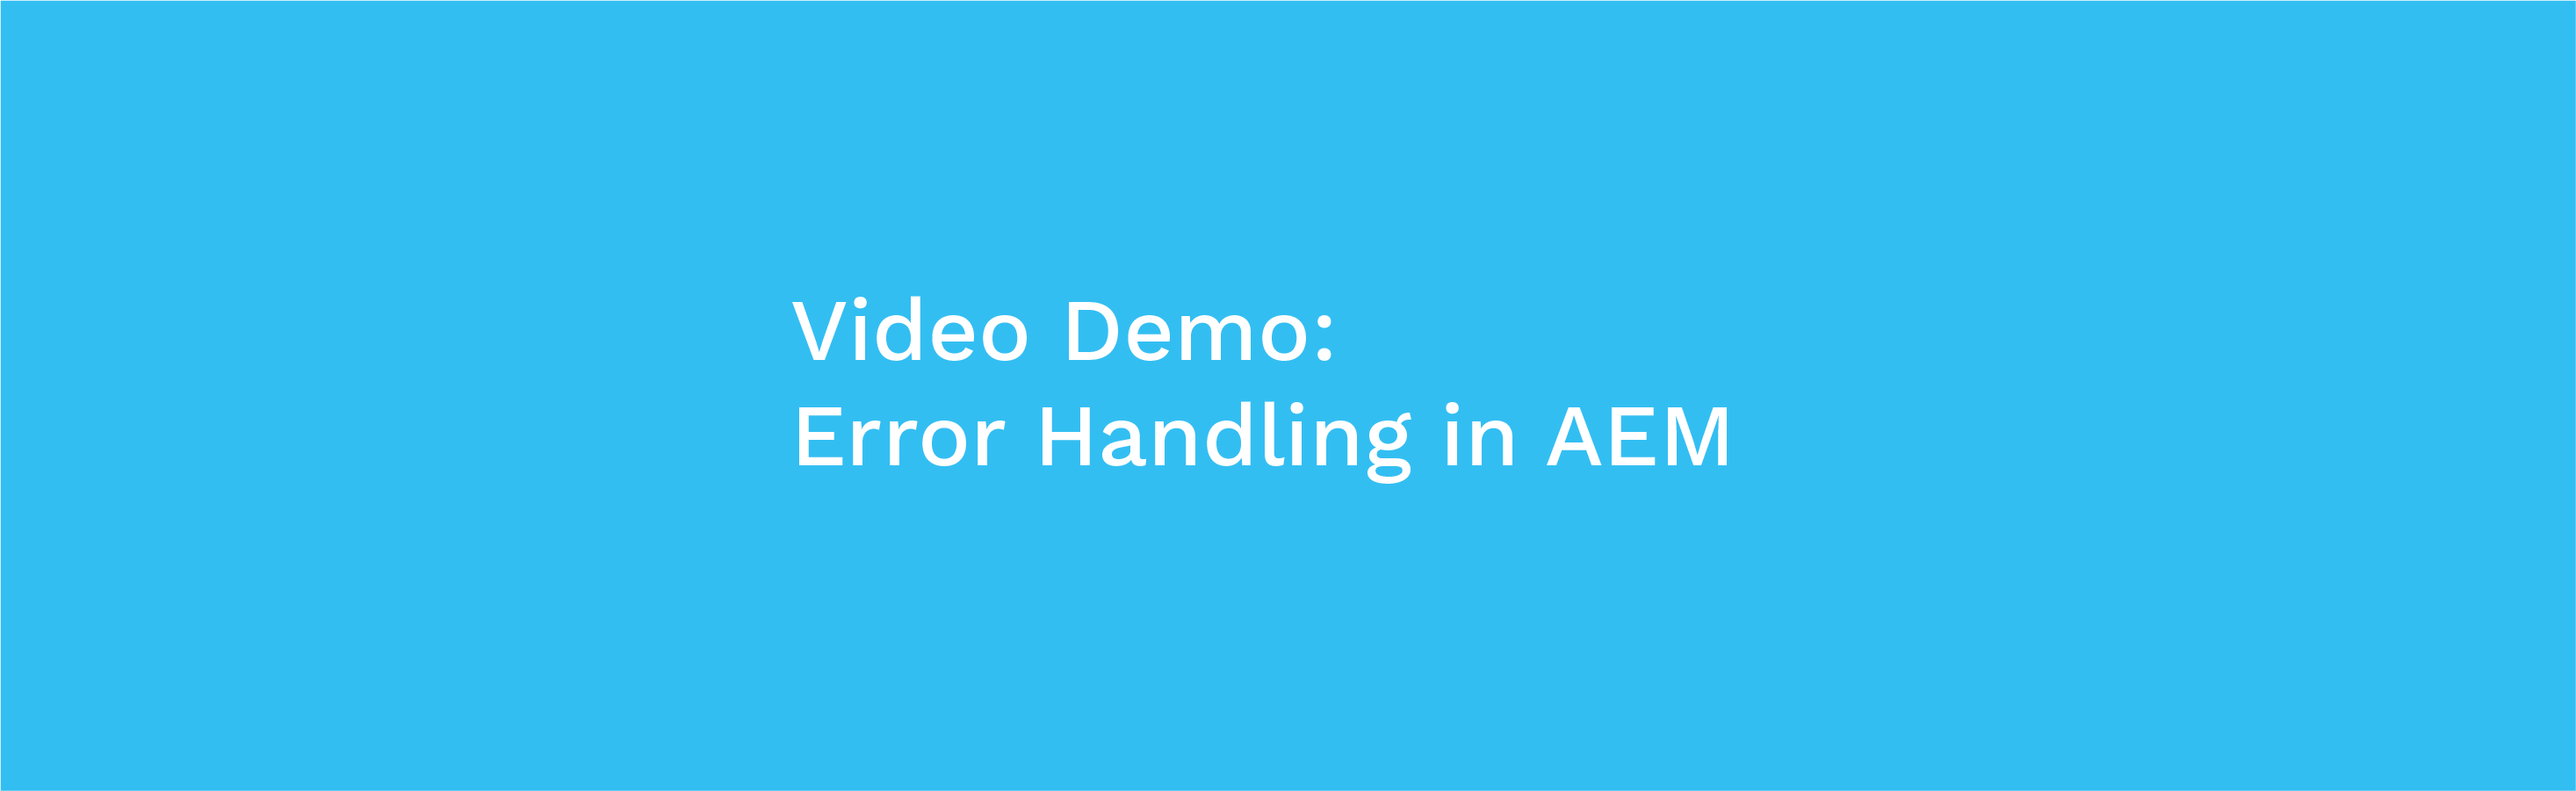 Developer Video Demo on How to Customize Error Handing in AEM